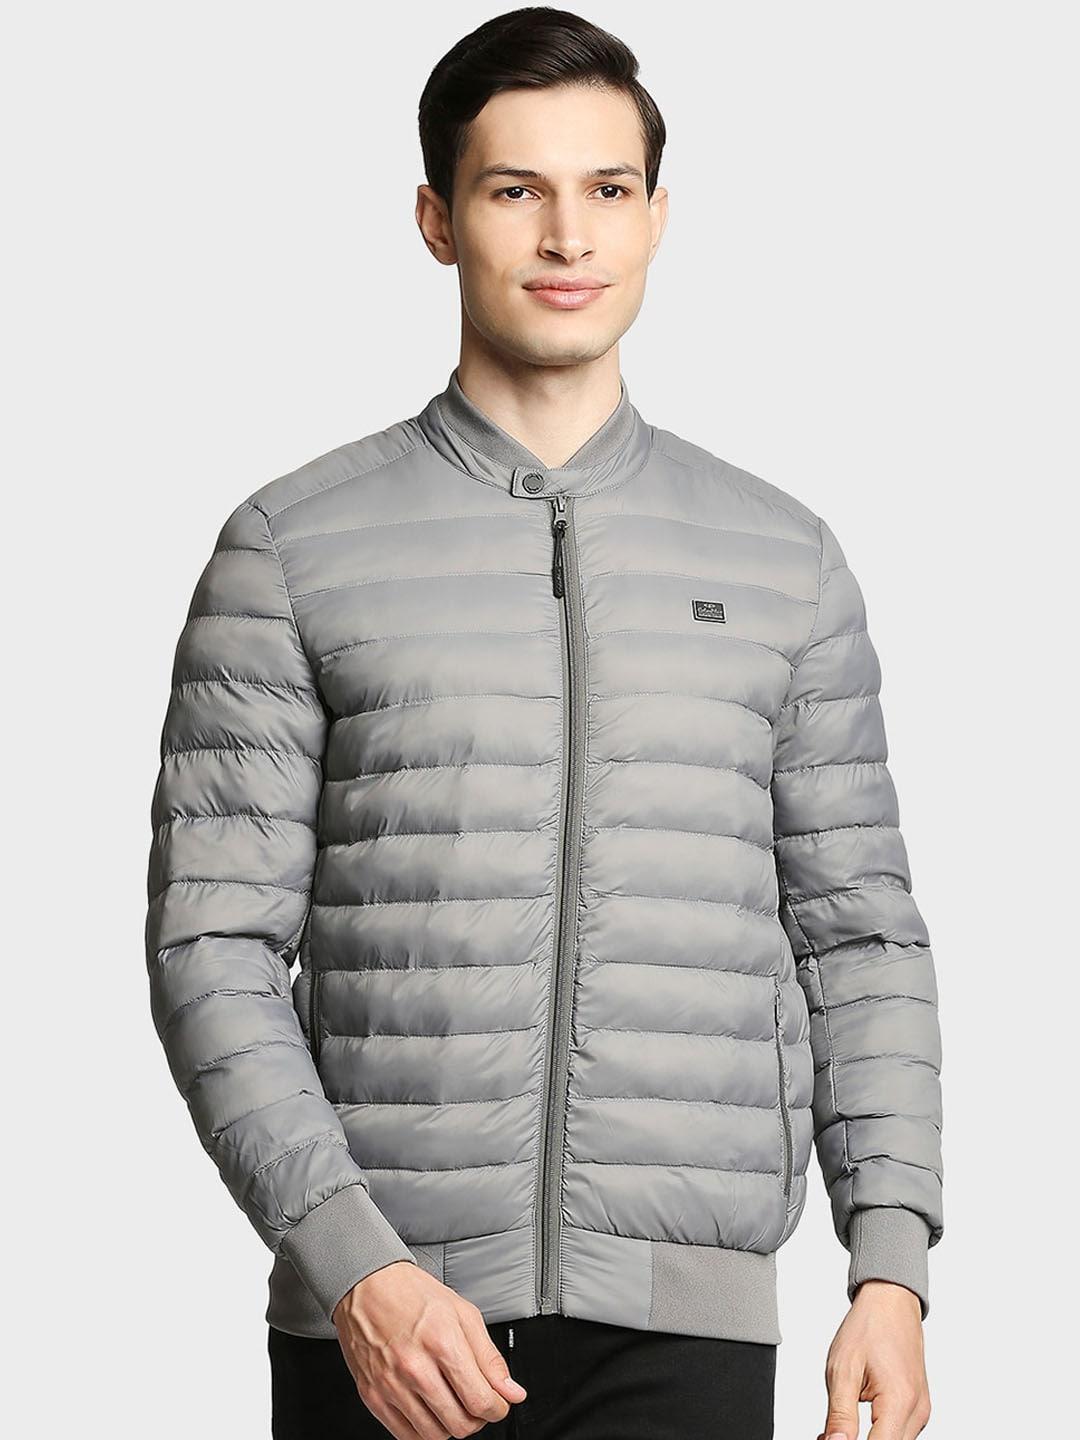 colorplus-men-grey-padded-jacket